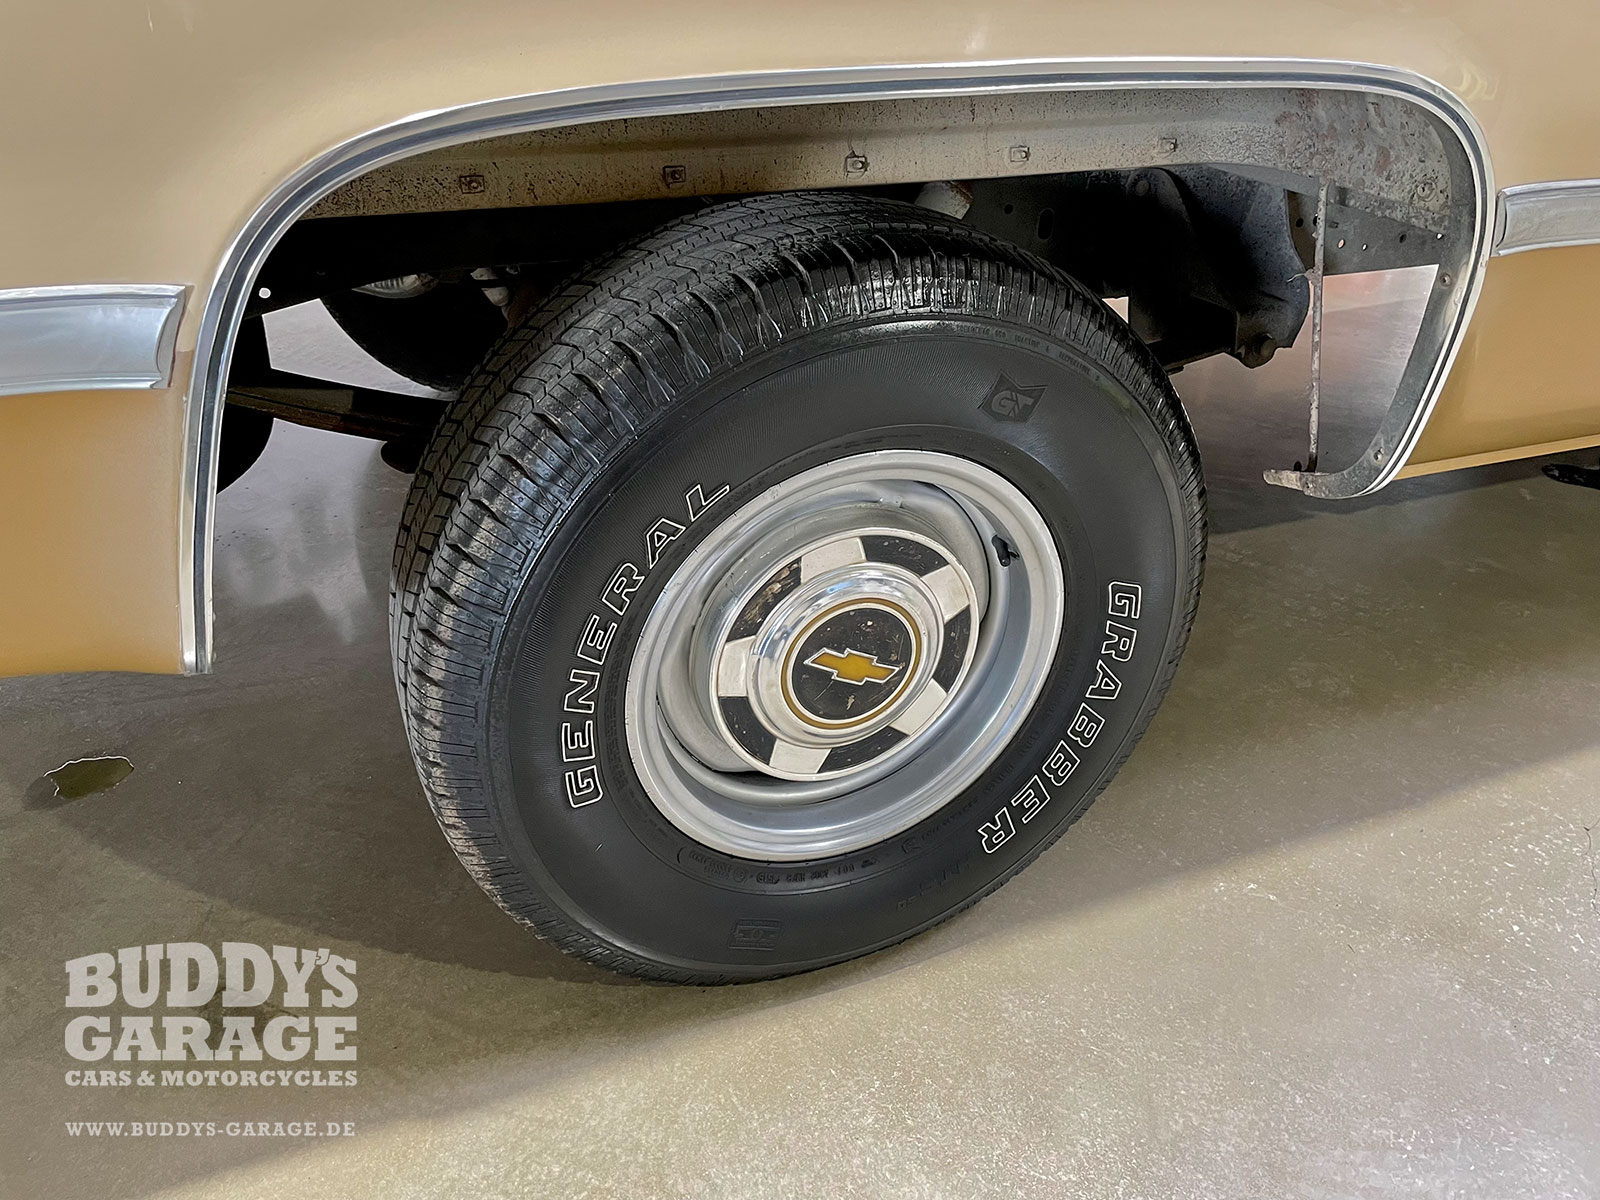 Chevrolet C-10 Silverado | Buddy's Garage Bad Oeynhausen